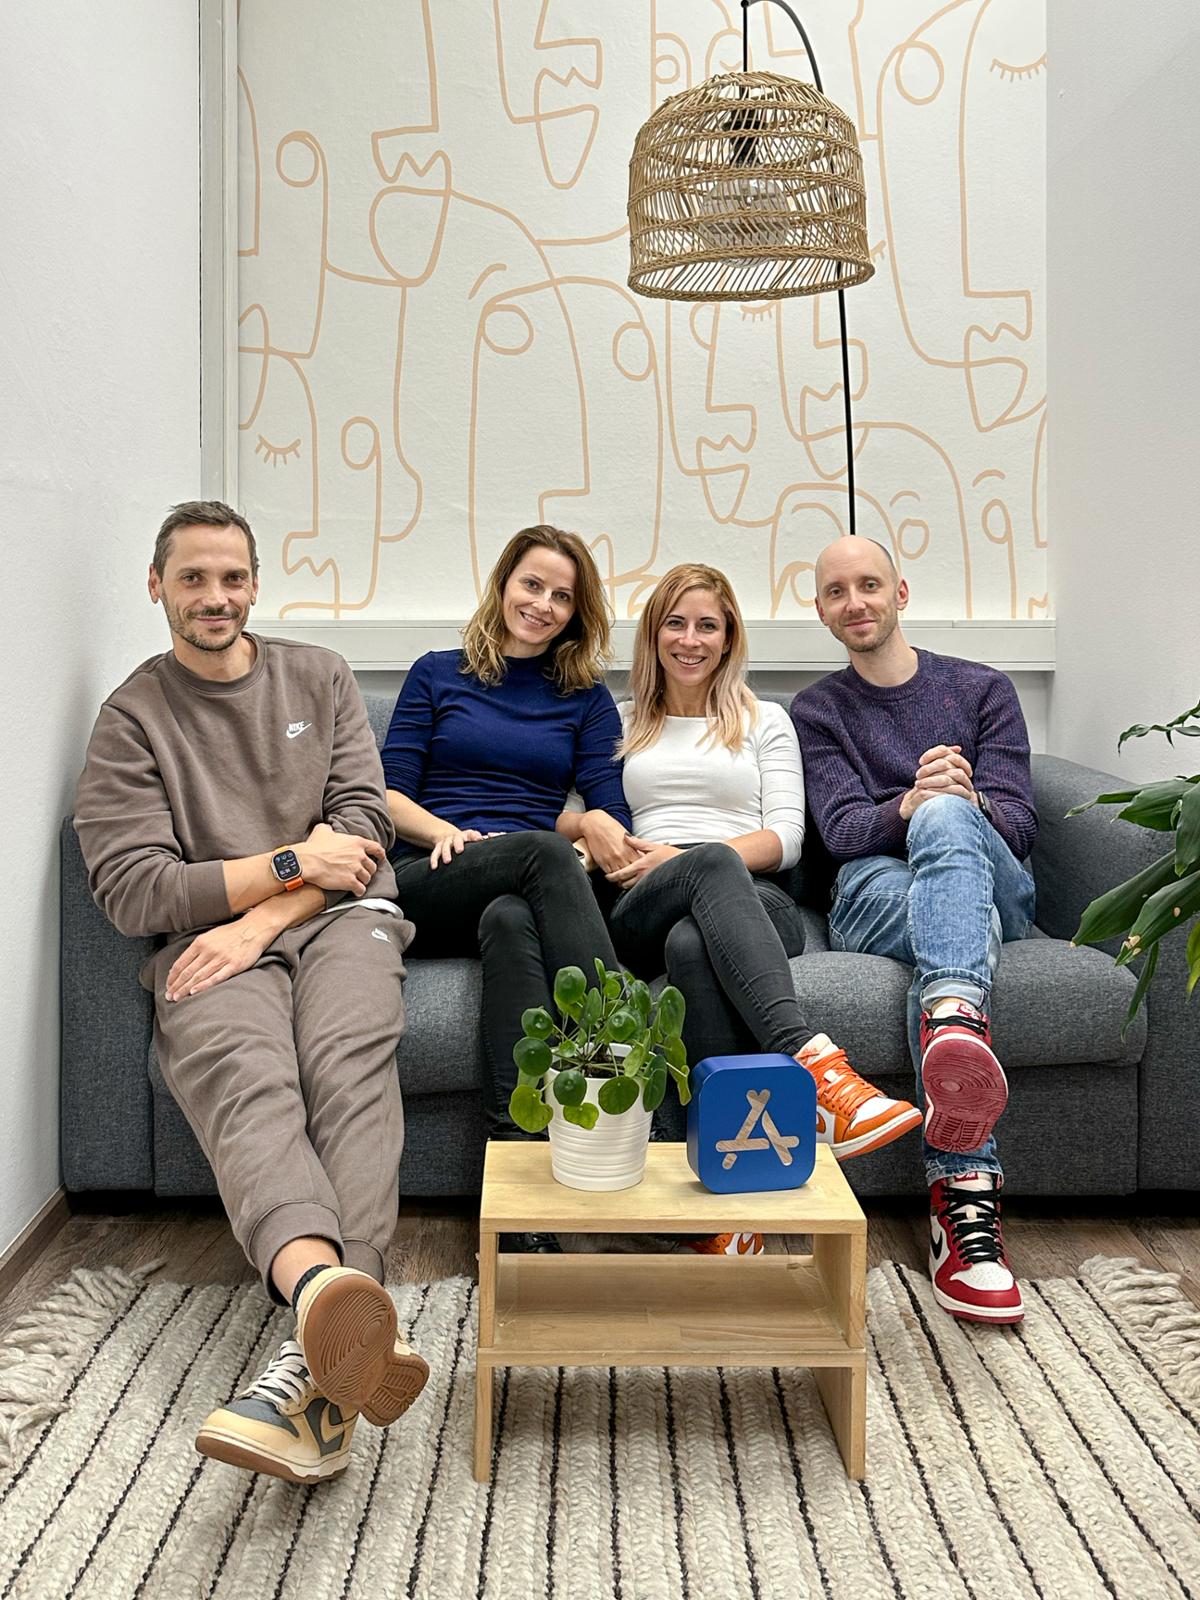 The Gentler Stories team: Andrej Mihelič, Katarina Lotrič, Jasna Krmelj and Luka Orešnik
/ Gentler Stories